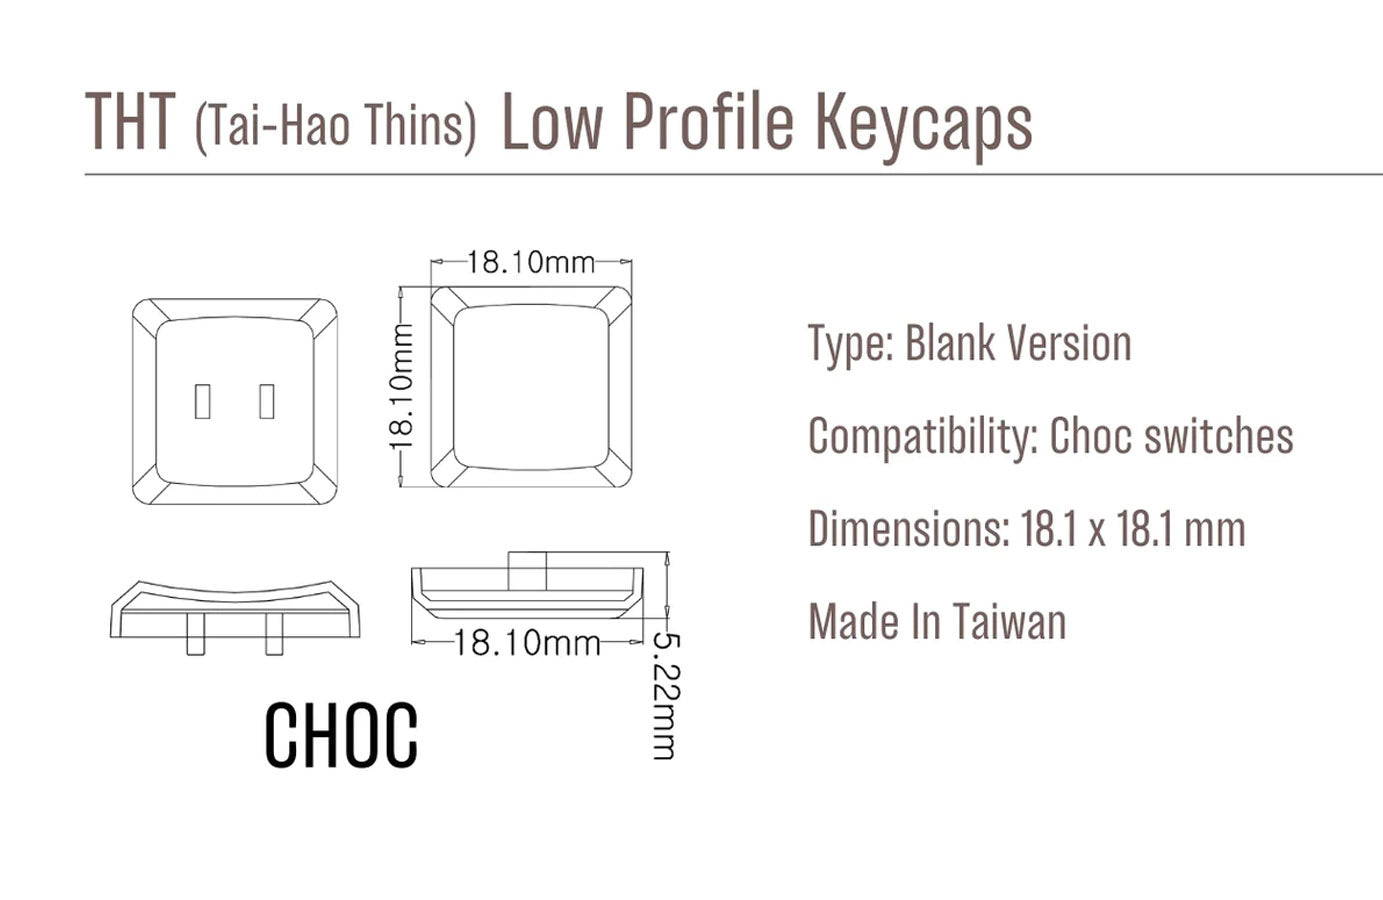 Tai-Hao White THT 18 Key ABS Low Profile (*) MKZH4IP3V5 |62489|